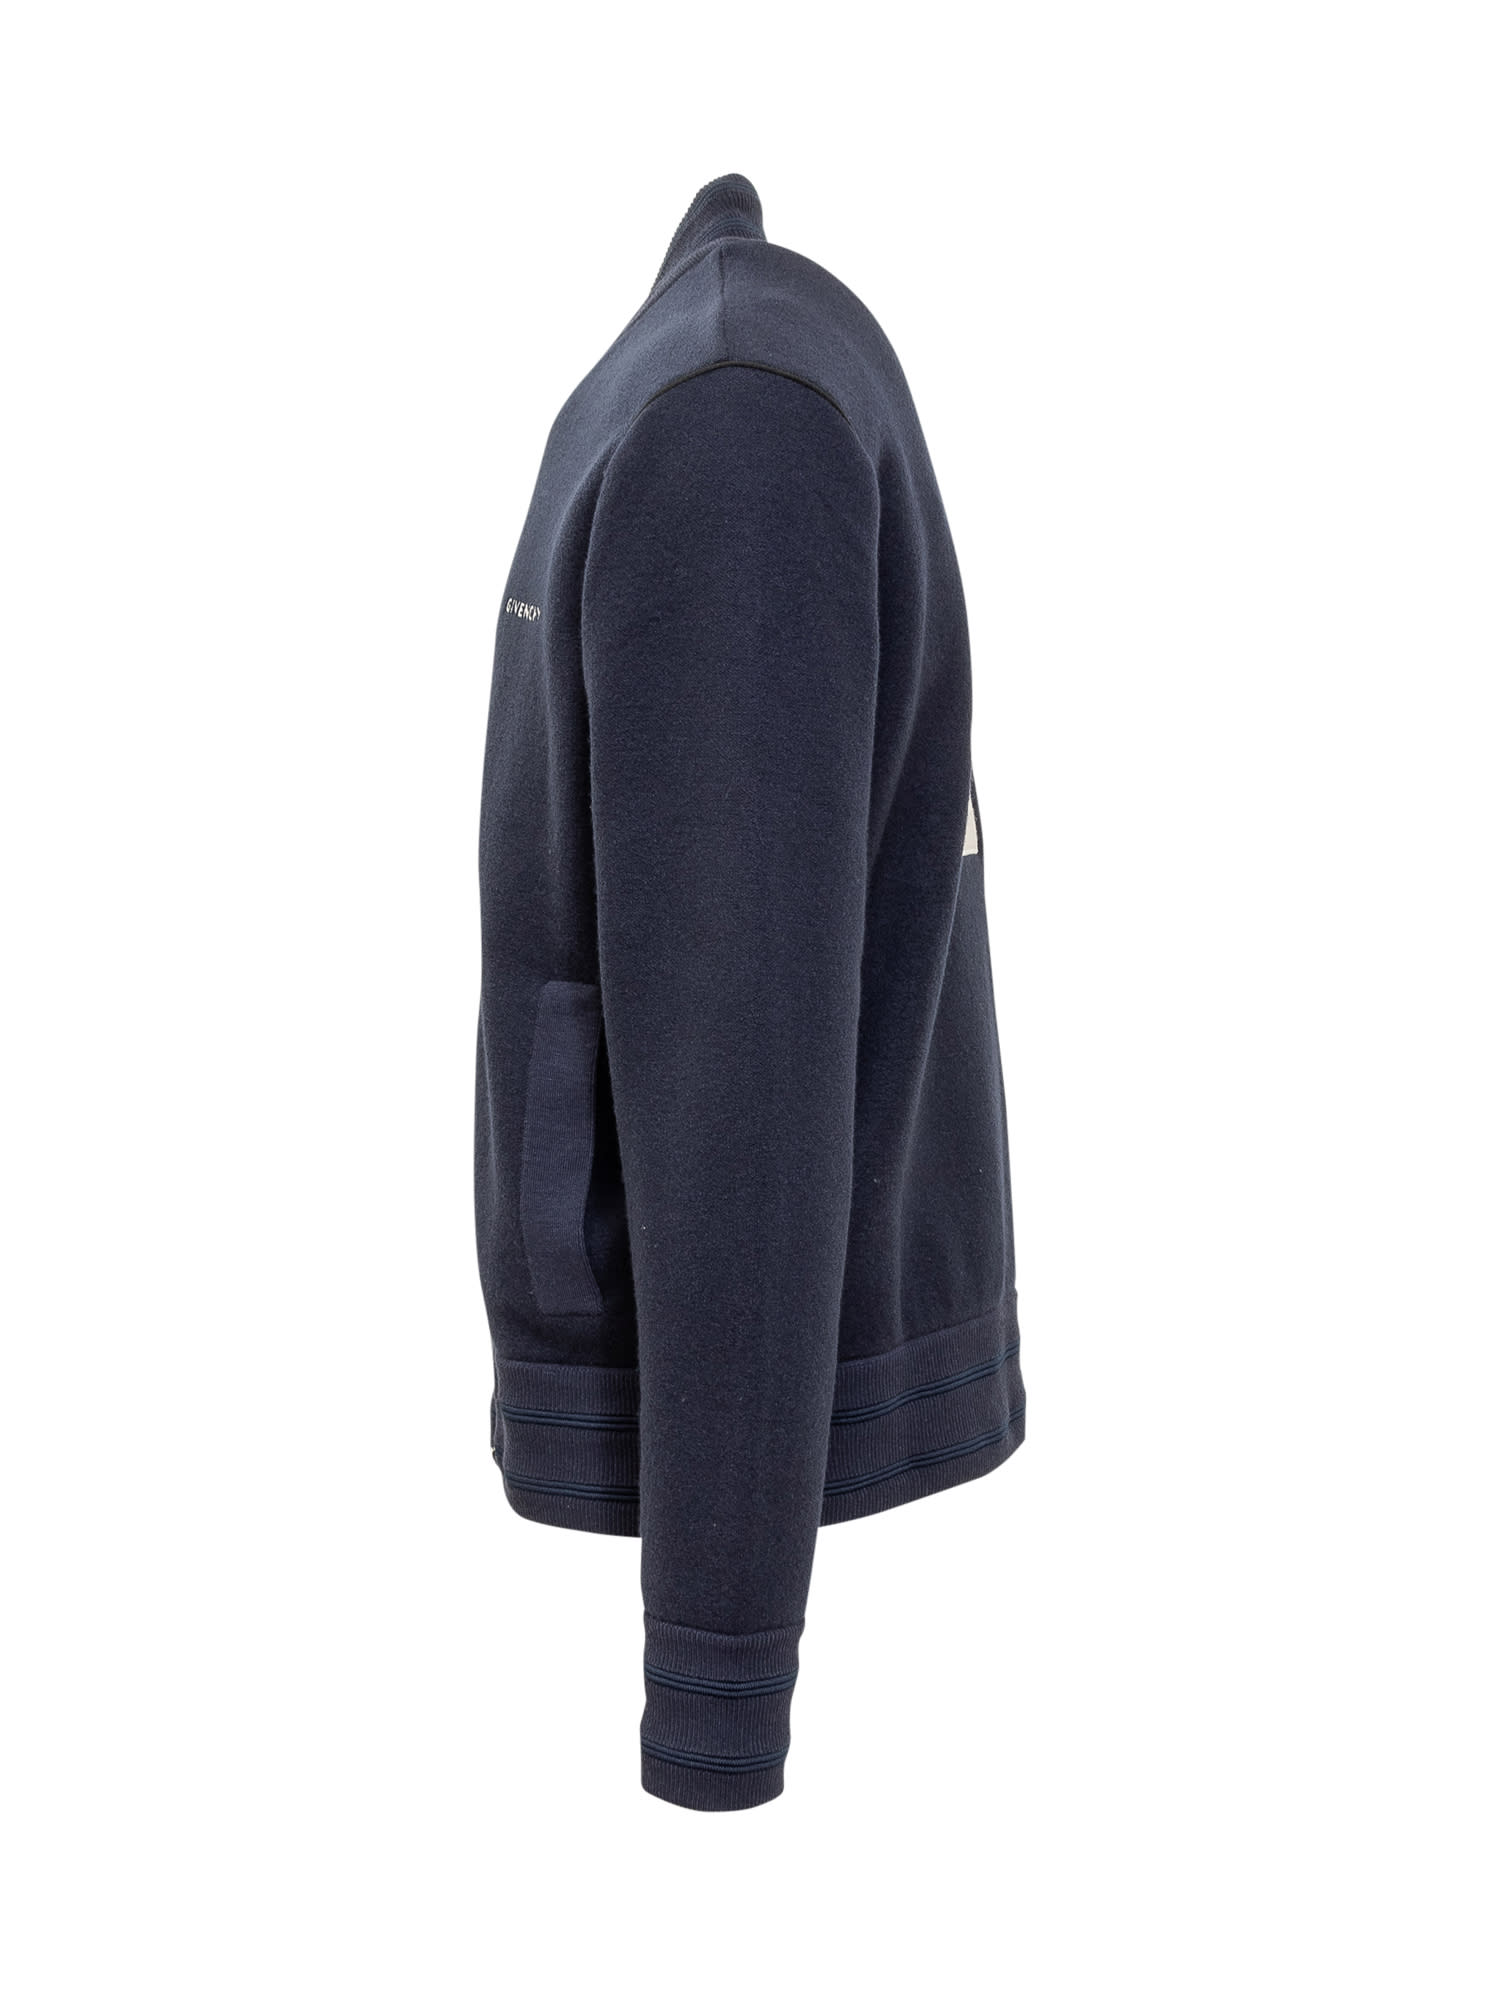 Shop Givenchy 4g Stars Knitted Varsity Jacket In Dark Navy